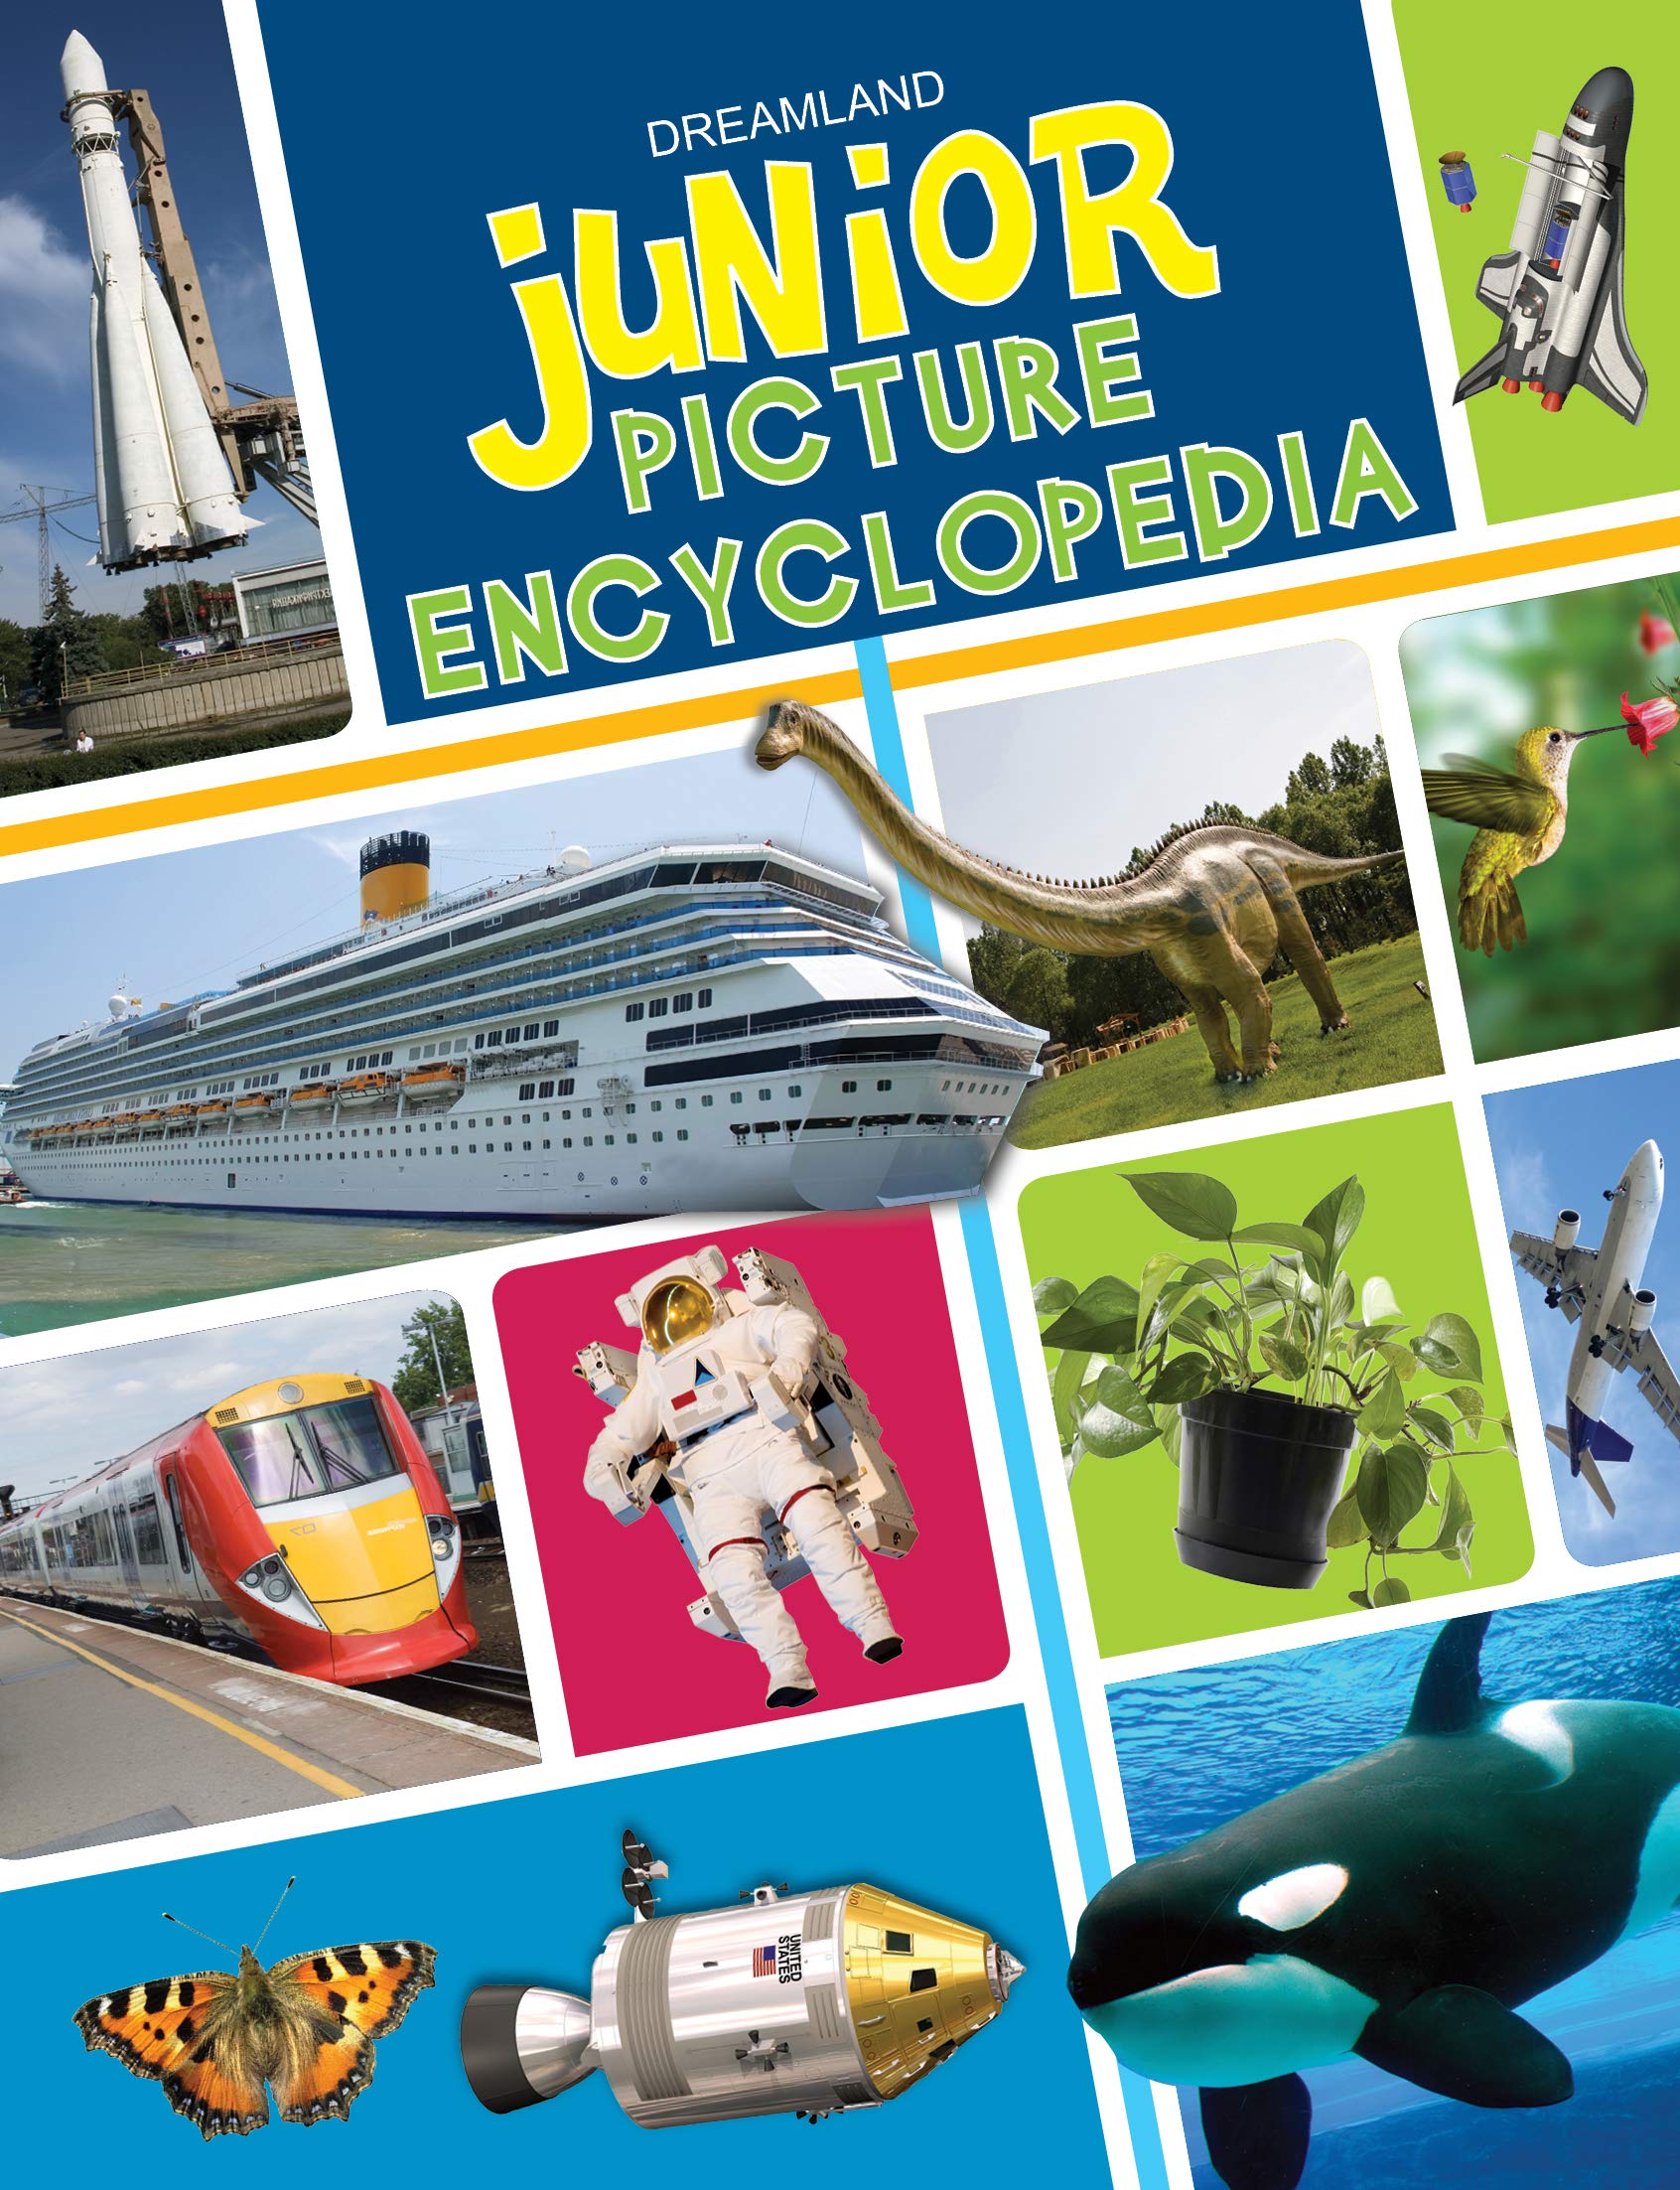 Junior Picture Encyclopedia